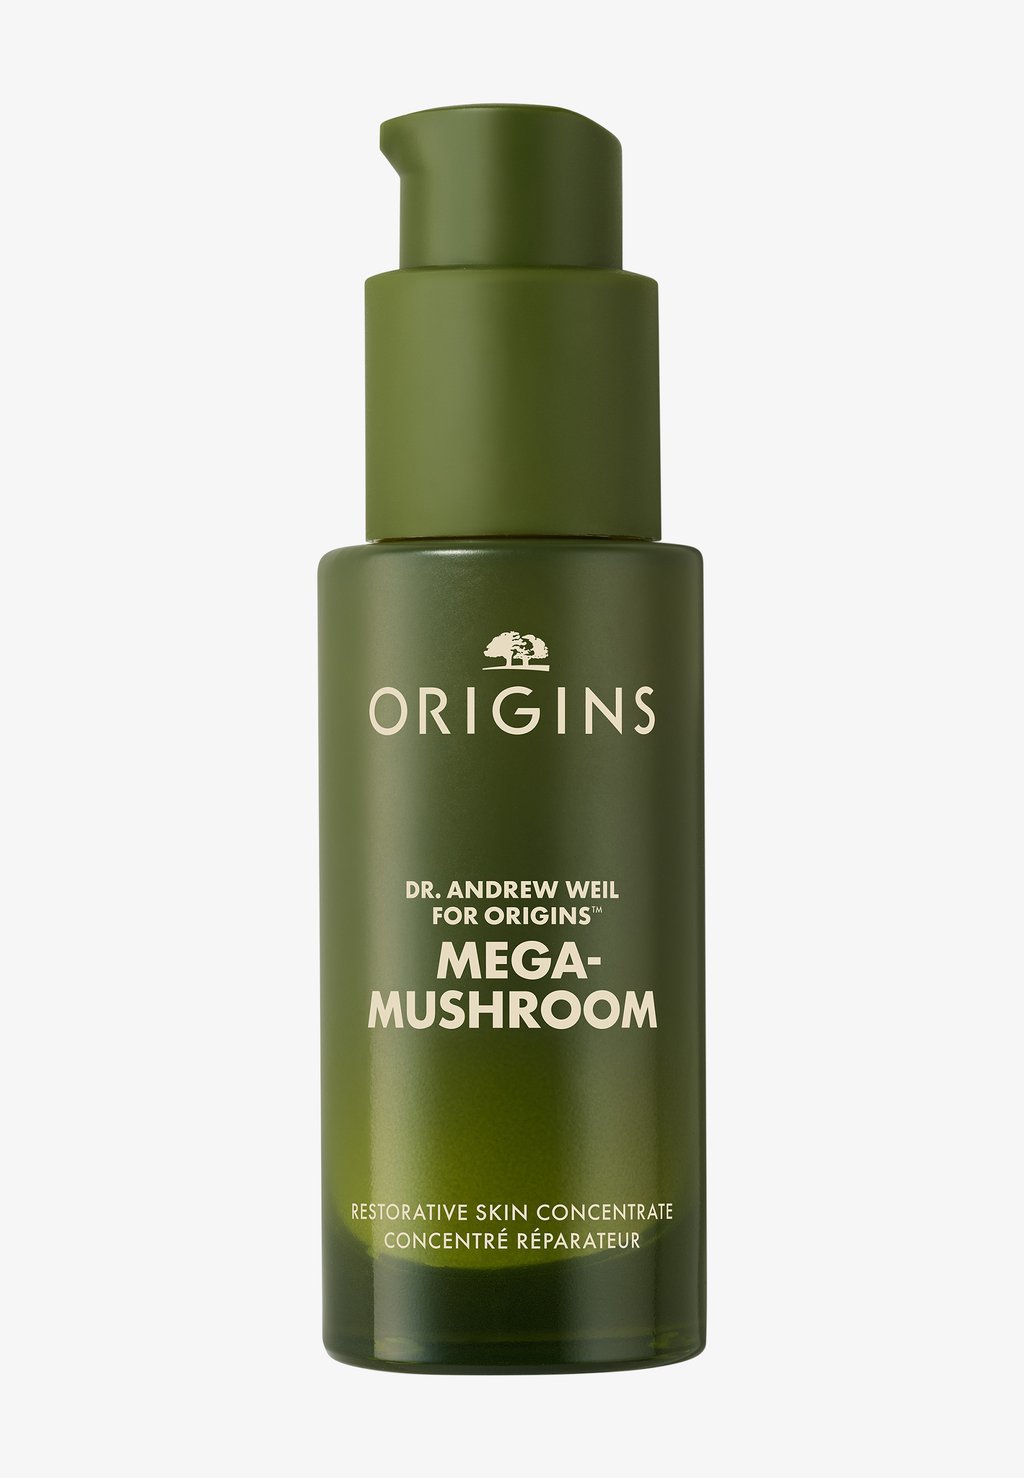 Крем для лица DR. WEIL MEGA-MUSHROOM RESCUE CONCENTRATE Origins origins dr andrew weil mega mushroom skin relief micellar cleanser